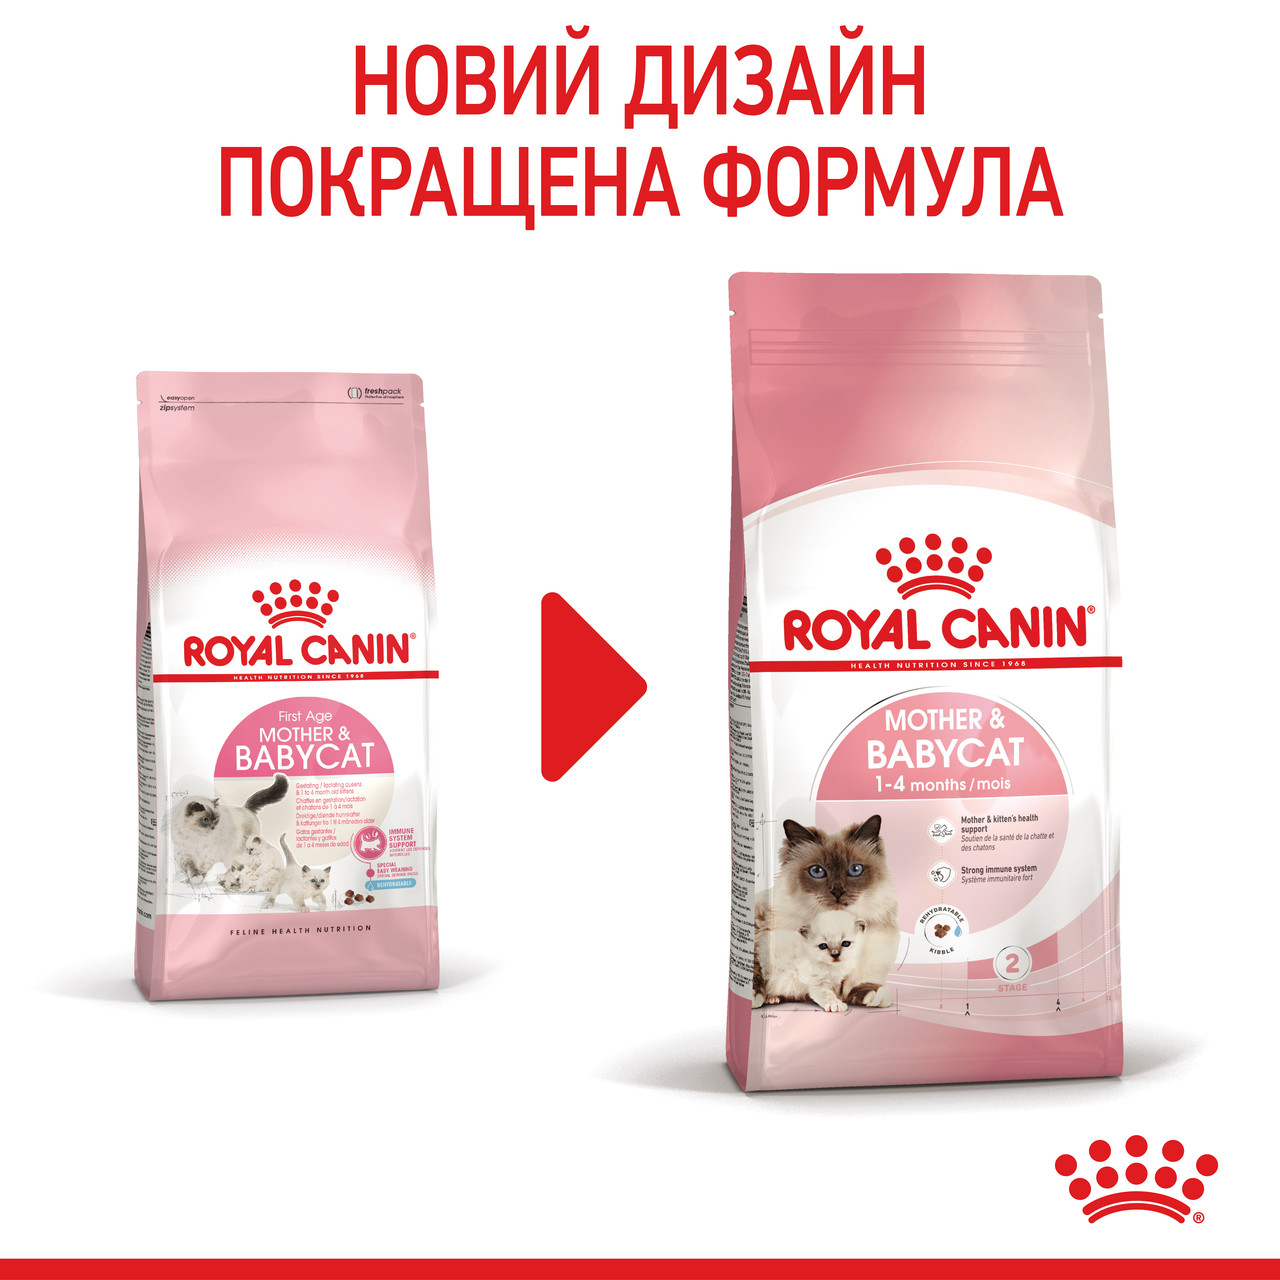 Сухой корм для котят Royal Canin Mother and Babycat, мясо птицы и рис, 2 кг - фото 2